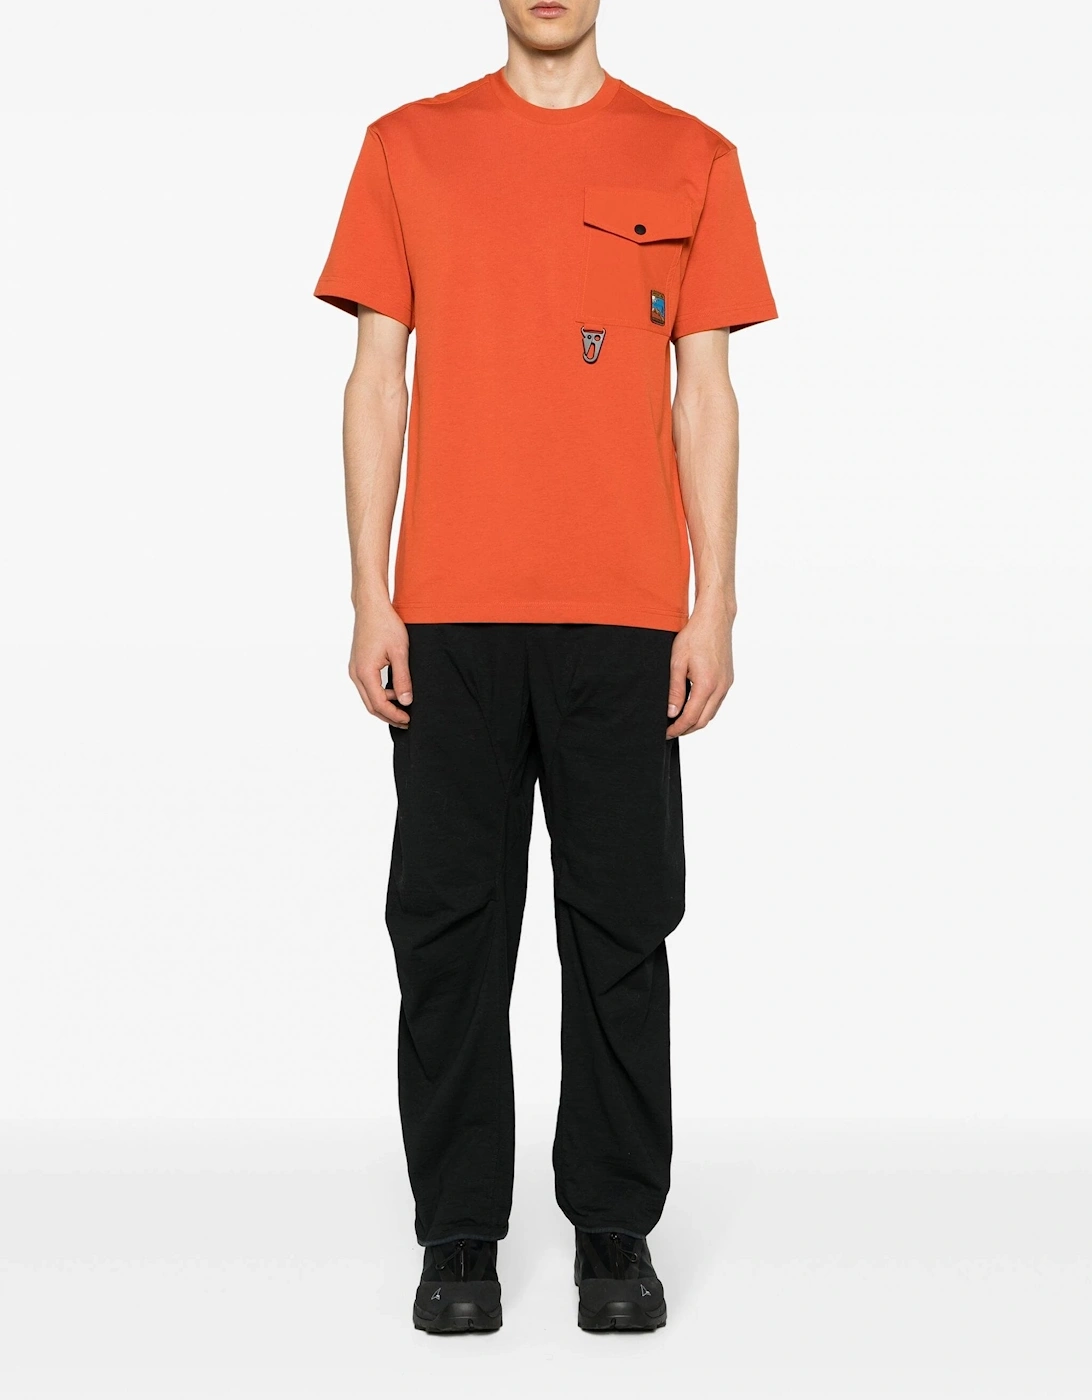 Pocket T Shirt Orange